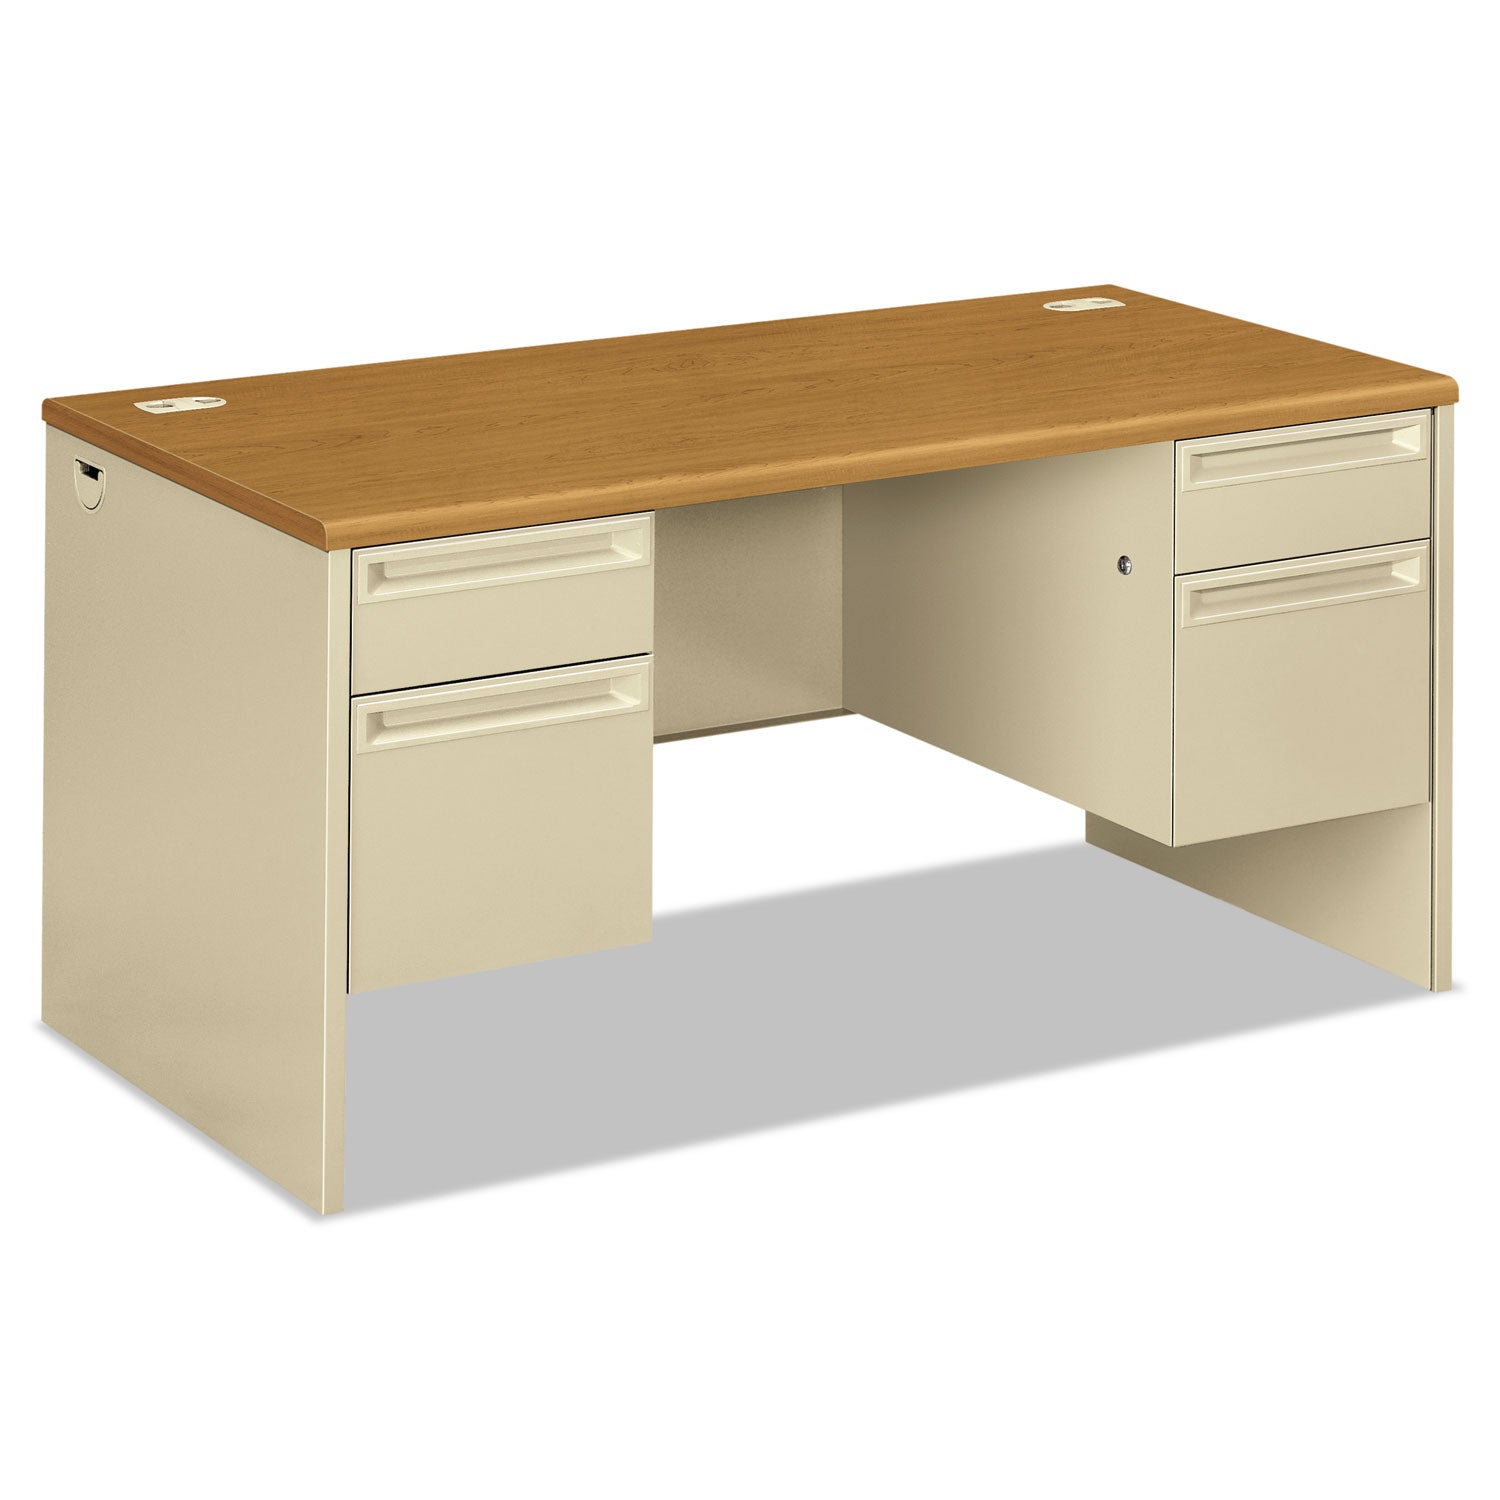 38000 Series Double Pedestal Desk, 60" x 30" x 29.5", Harvest/Putty - 